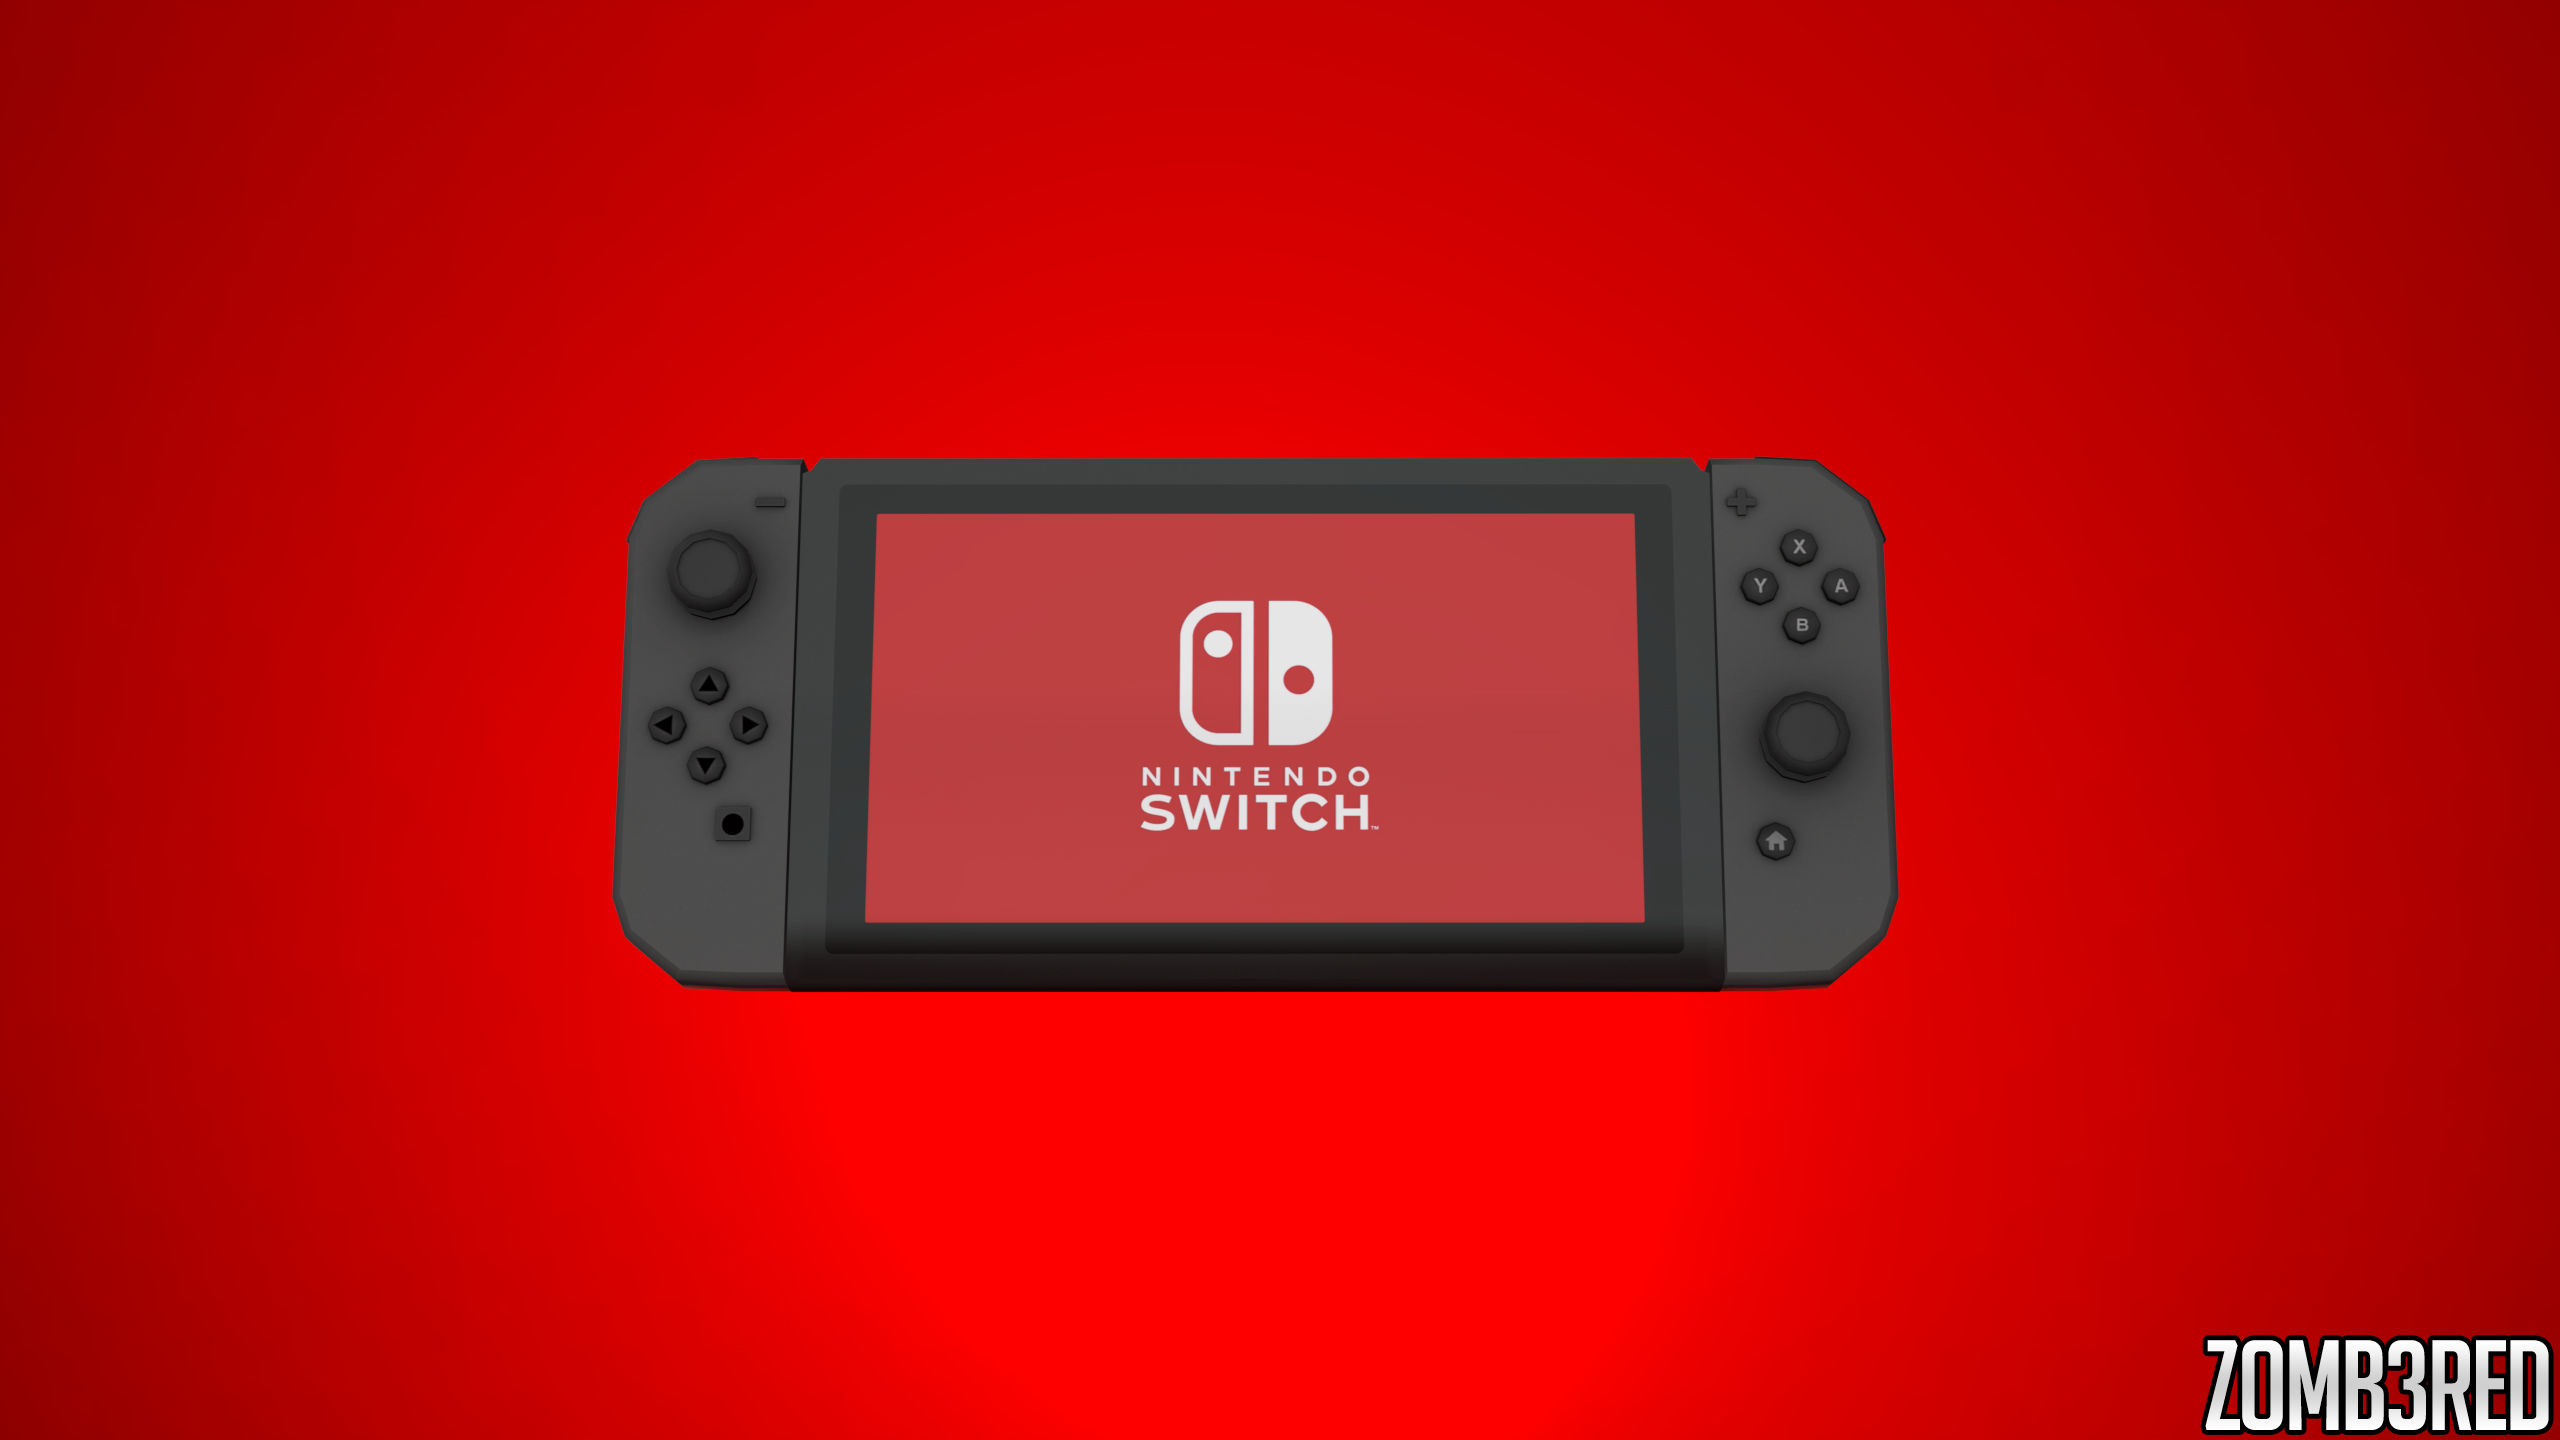 Nintendo Switch by mario16772